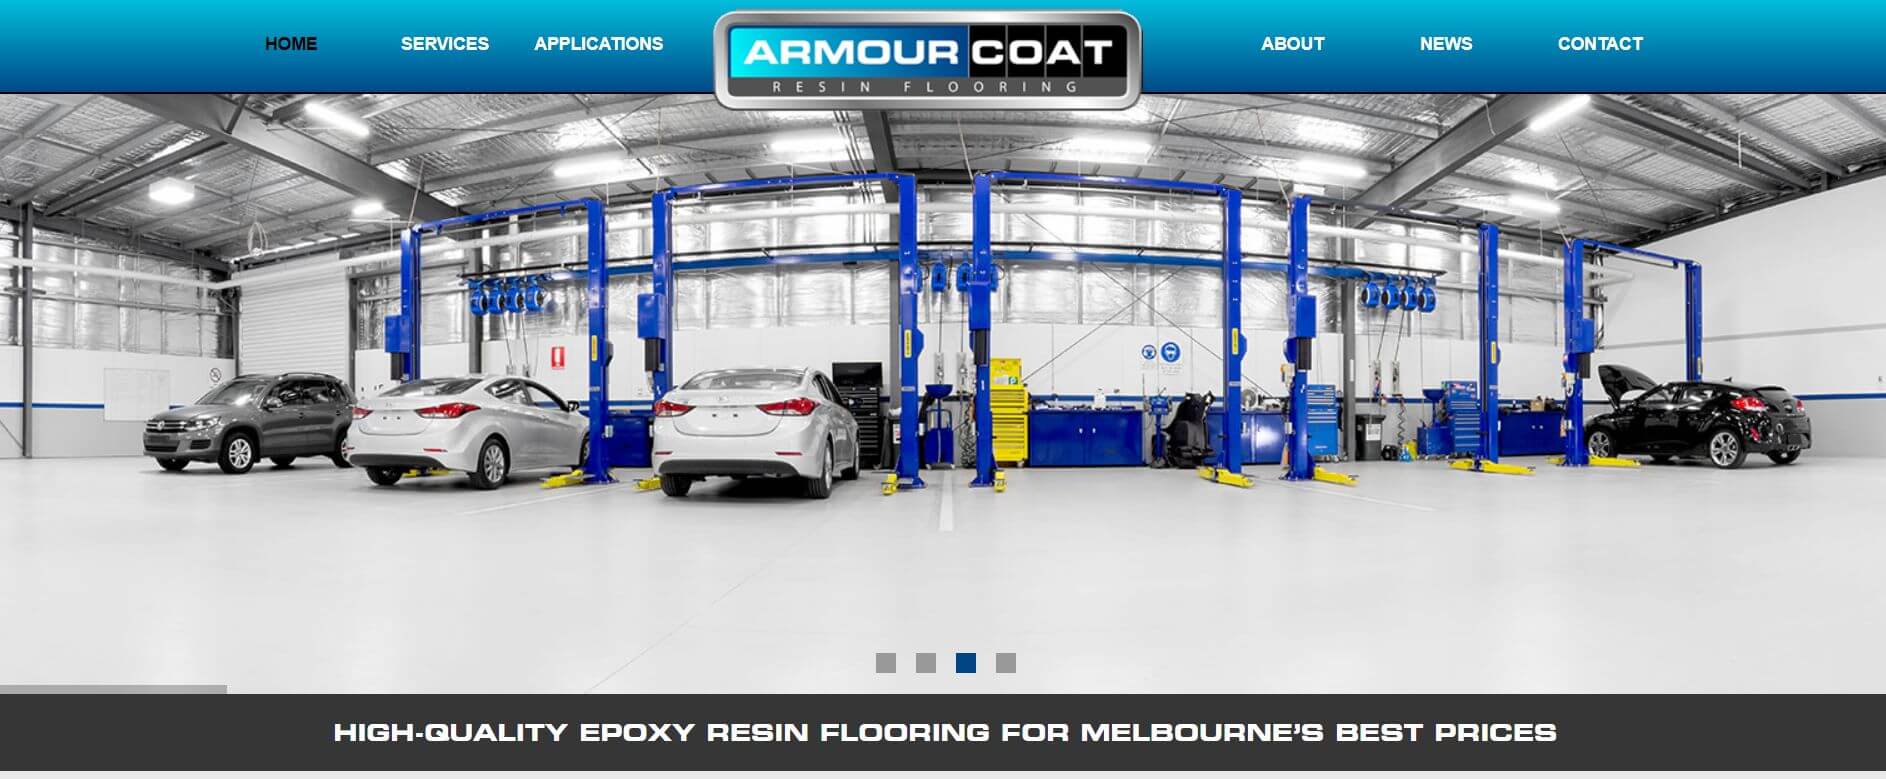 armour coat epoxy flooring & coatings melbourne